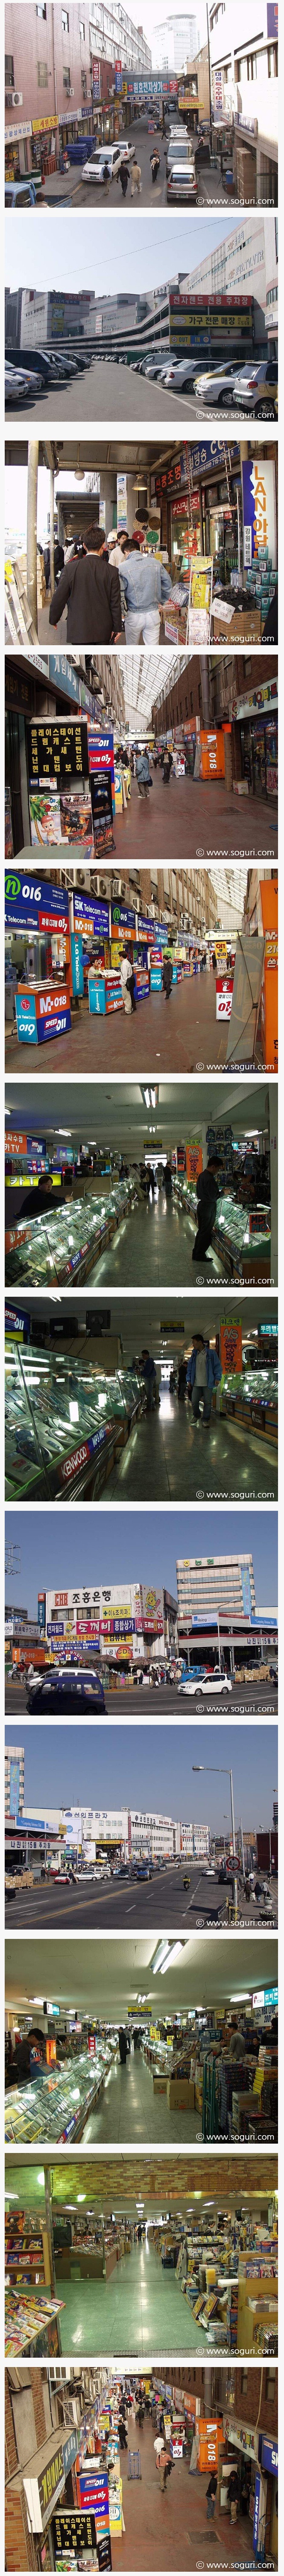 The heyday of Yongsan Electronics Market 20 years ago